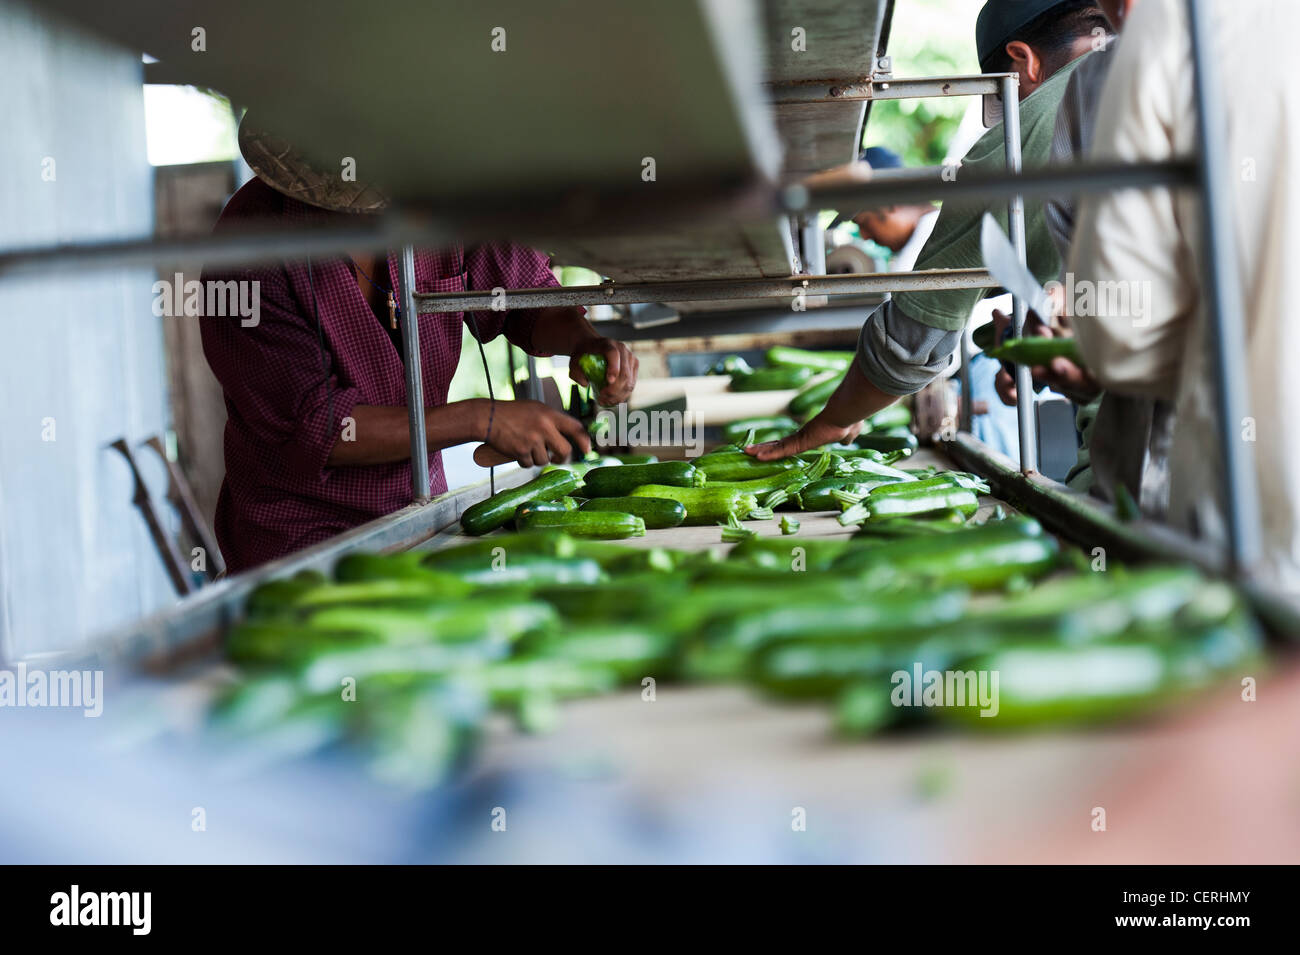 Workers sorting vegetables on conveyor belt Stock Photo